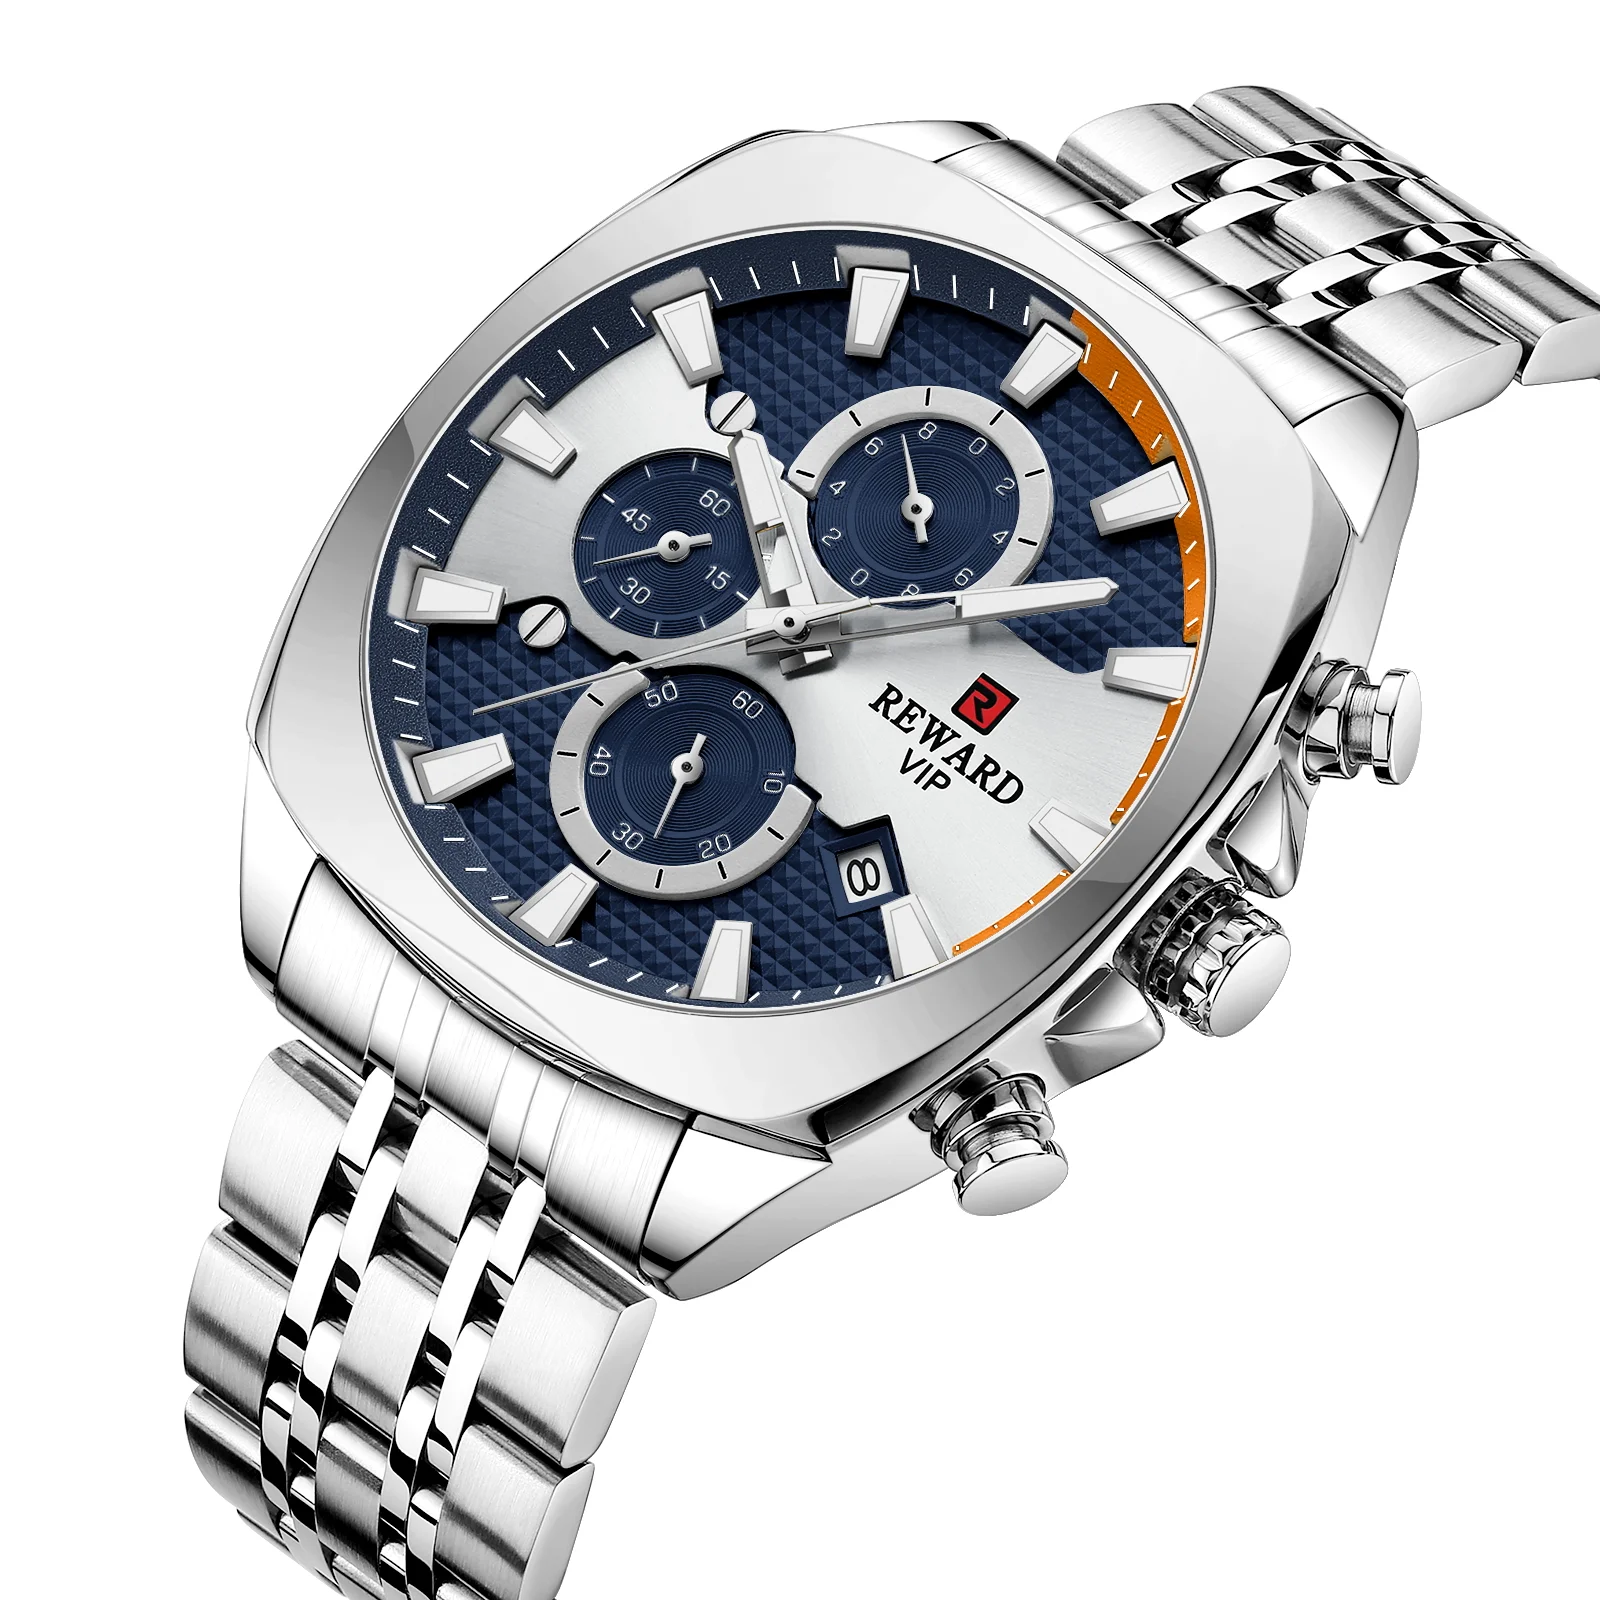 Reward Vip Luxury Wrist Watch Men Sports Fashion Customized Logo Quarth Watch Steel Watches RD81065M